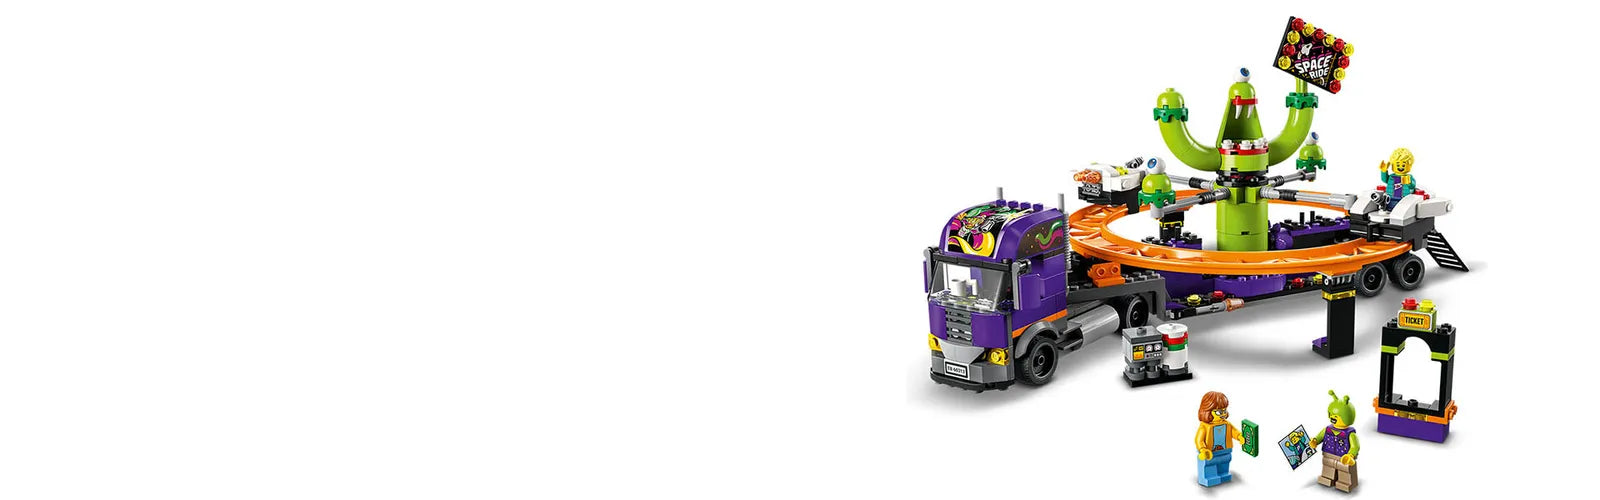 LEGO 60313 Raumfahrt-Spaßauto